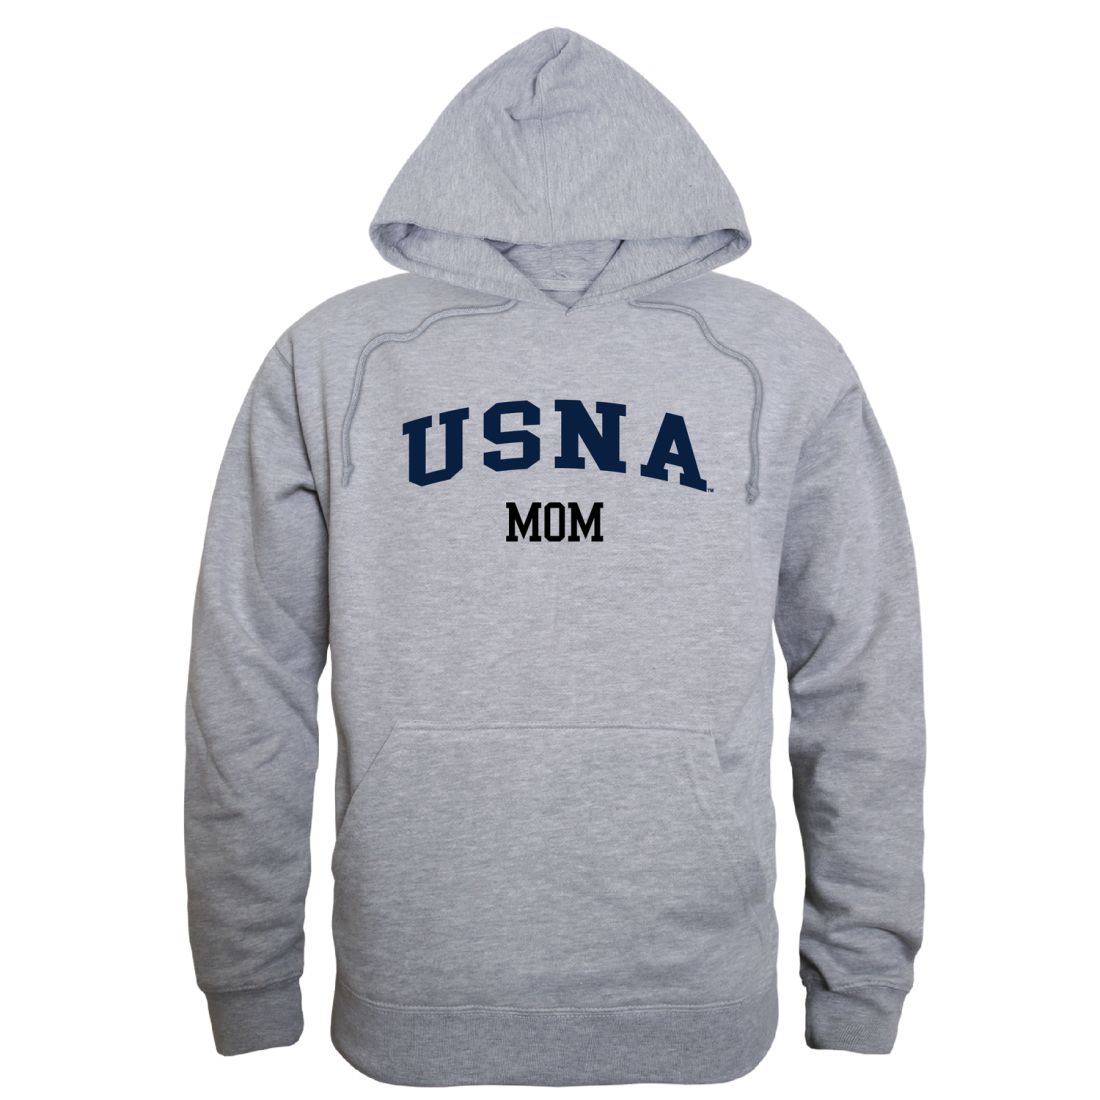 United States Naval Academy Midshipmen Mom Fleece Hoodie Sweatshirts